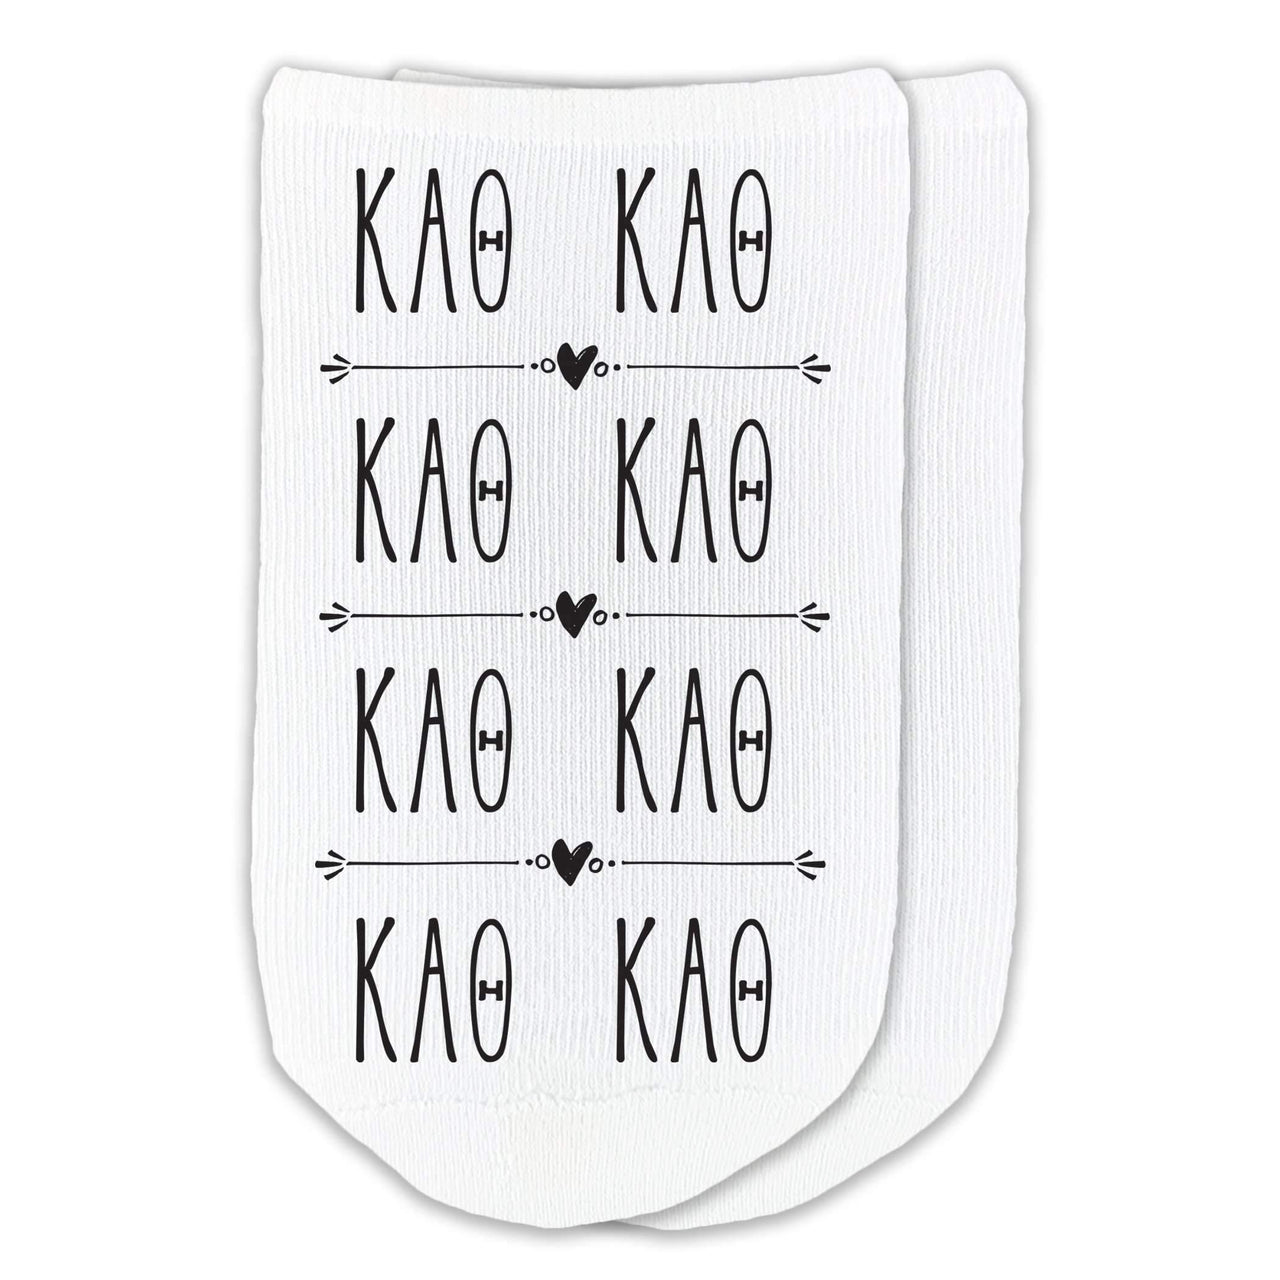 Kappa Alpha Theta sorority letters repeat boho design custom printed on white cotton no show socks